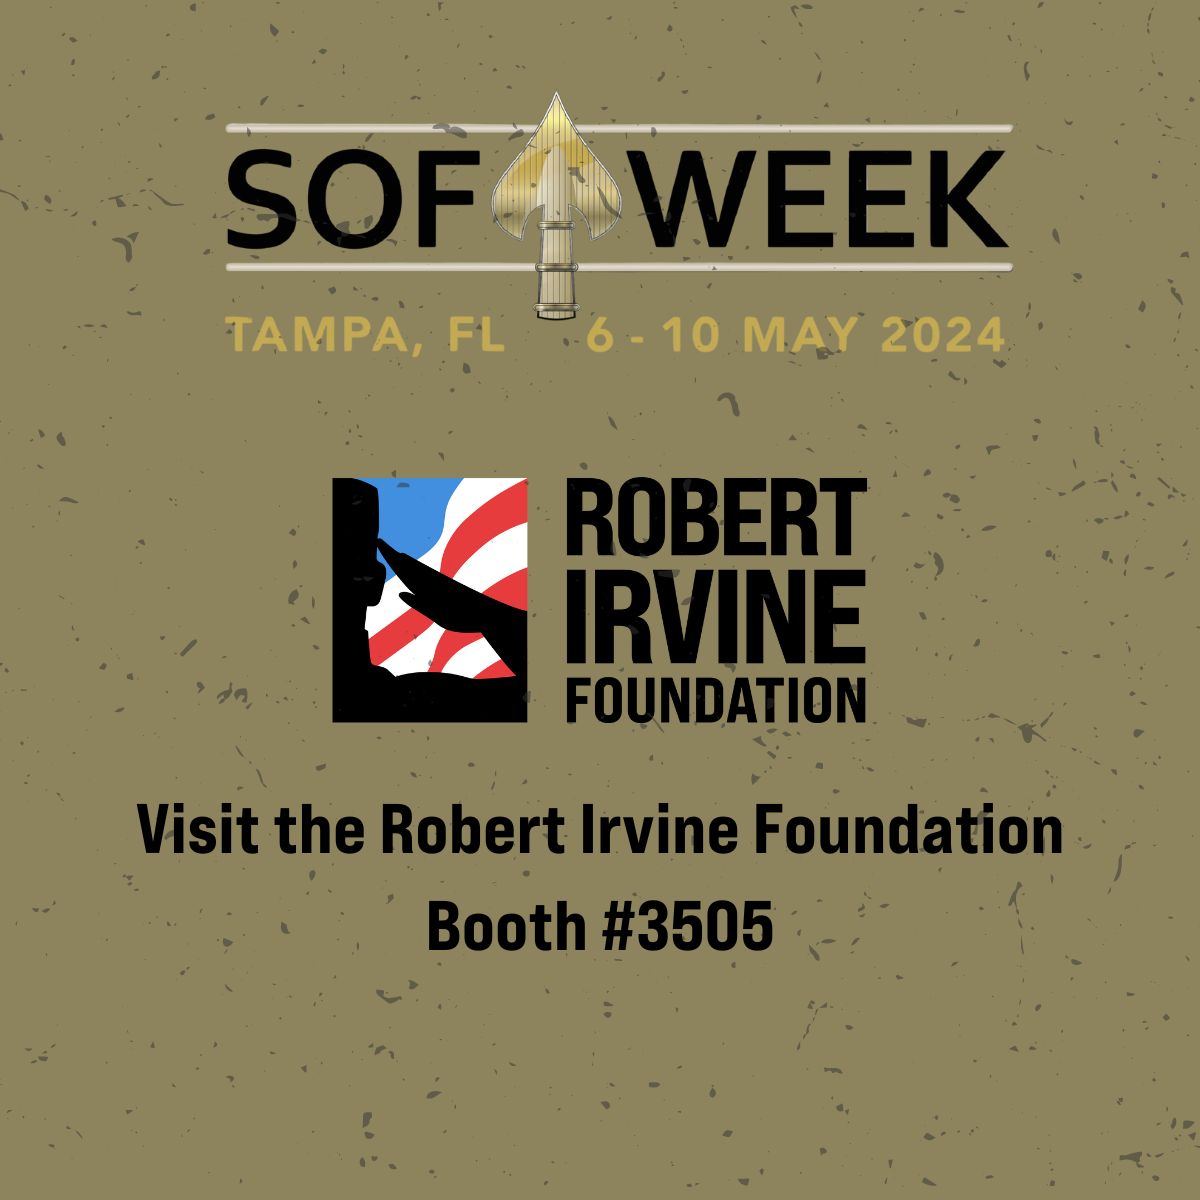 Robert Irvine Foundation on LinkedIn: Come meet members of the Robert ...